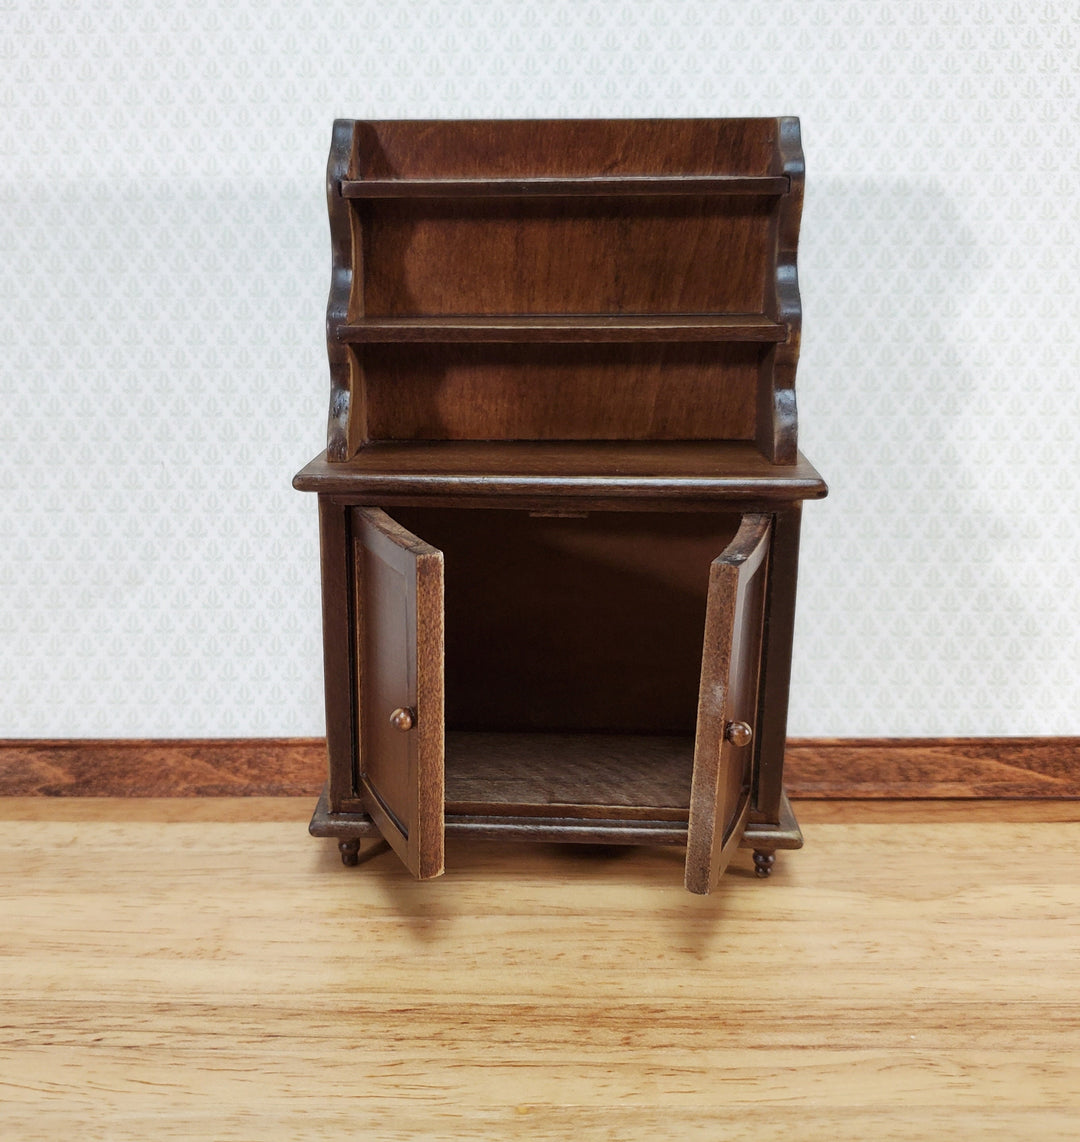 Dollhouse Tall Hutch Cabinet with Shelves Dark Walnut Finish 1:12 Scale Furniture